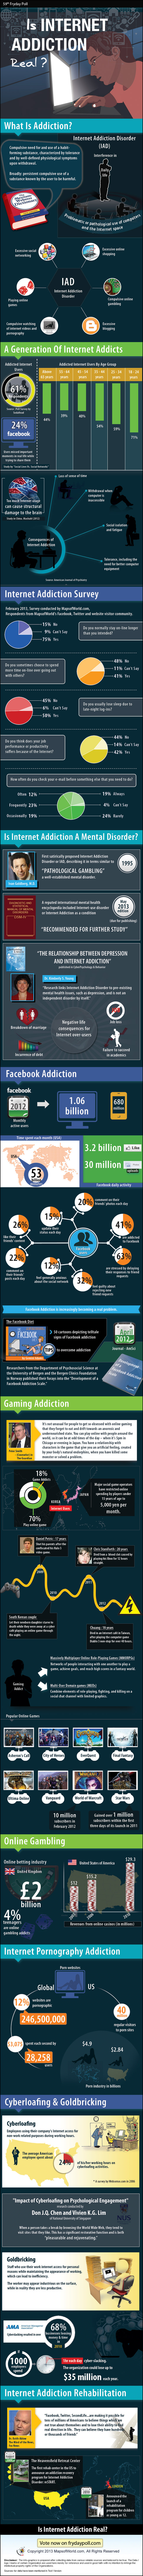 internet-addiction-facts-infographic